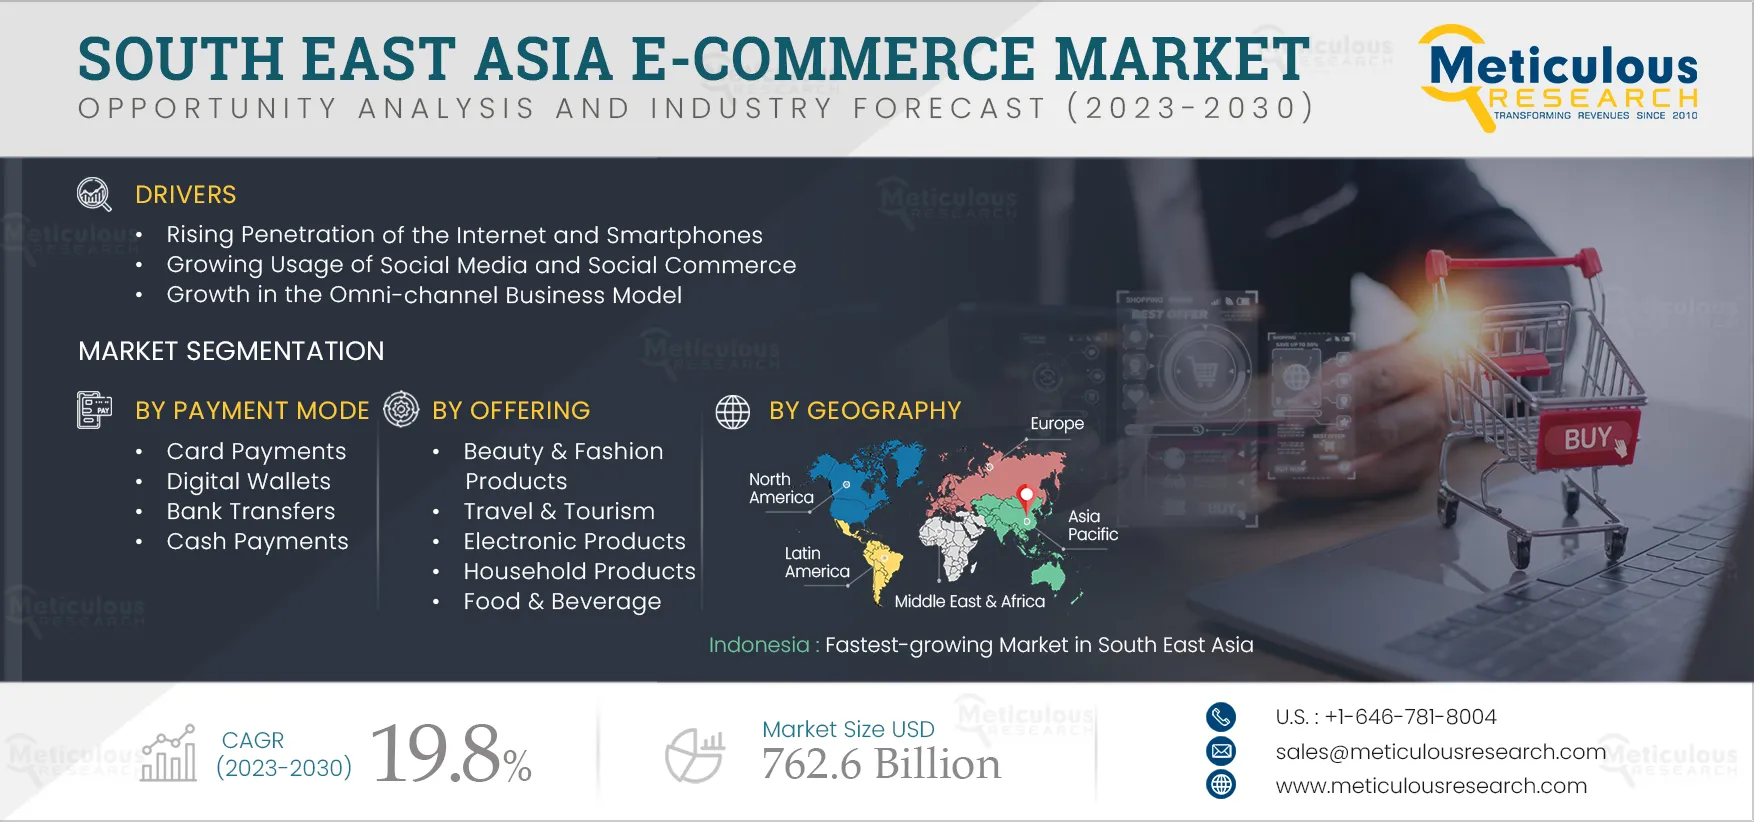 South East Asia E-commerce Market